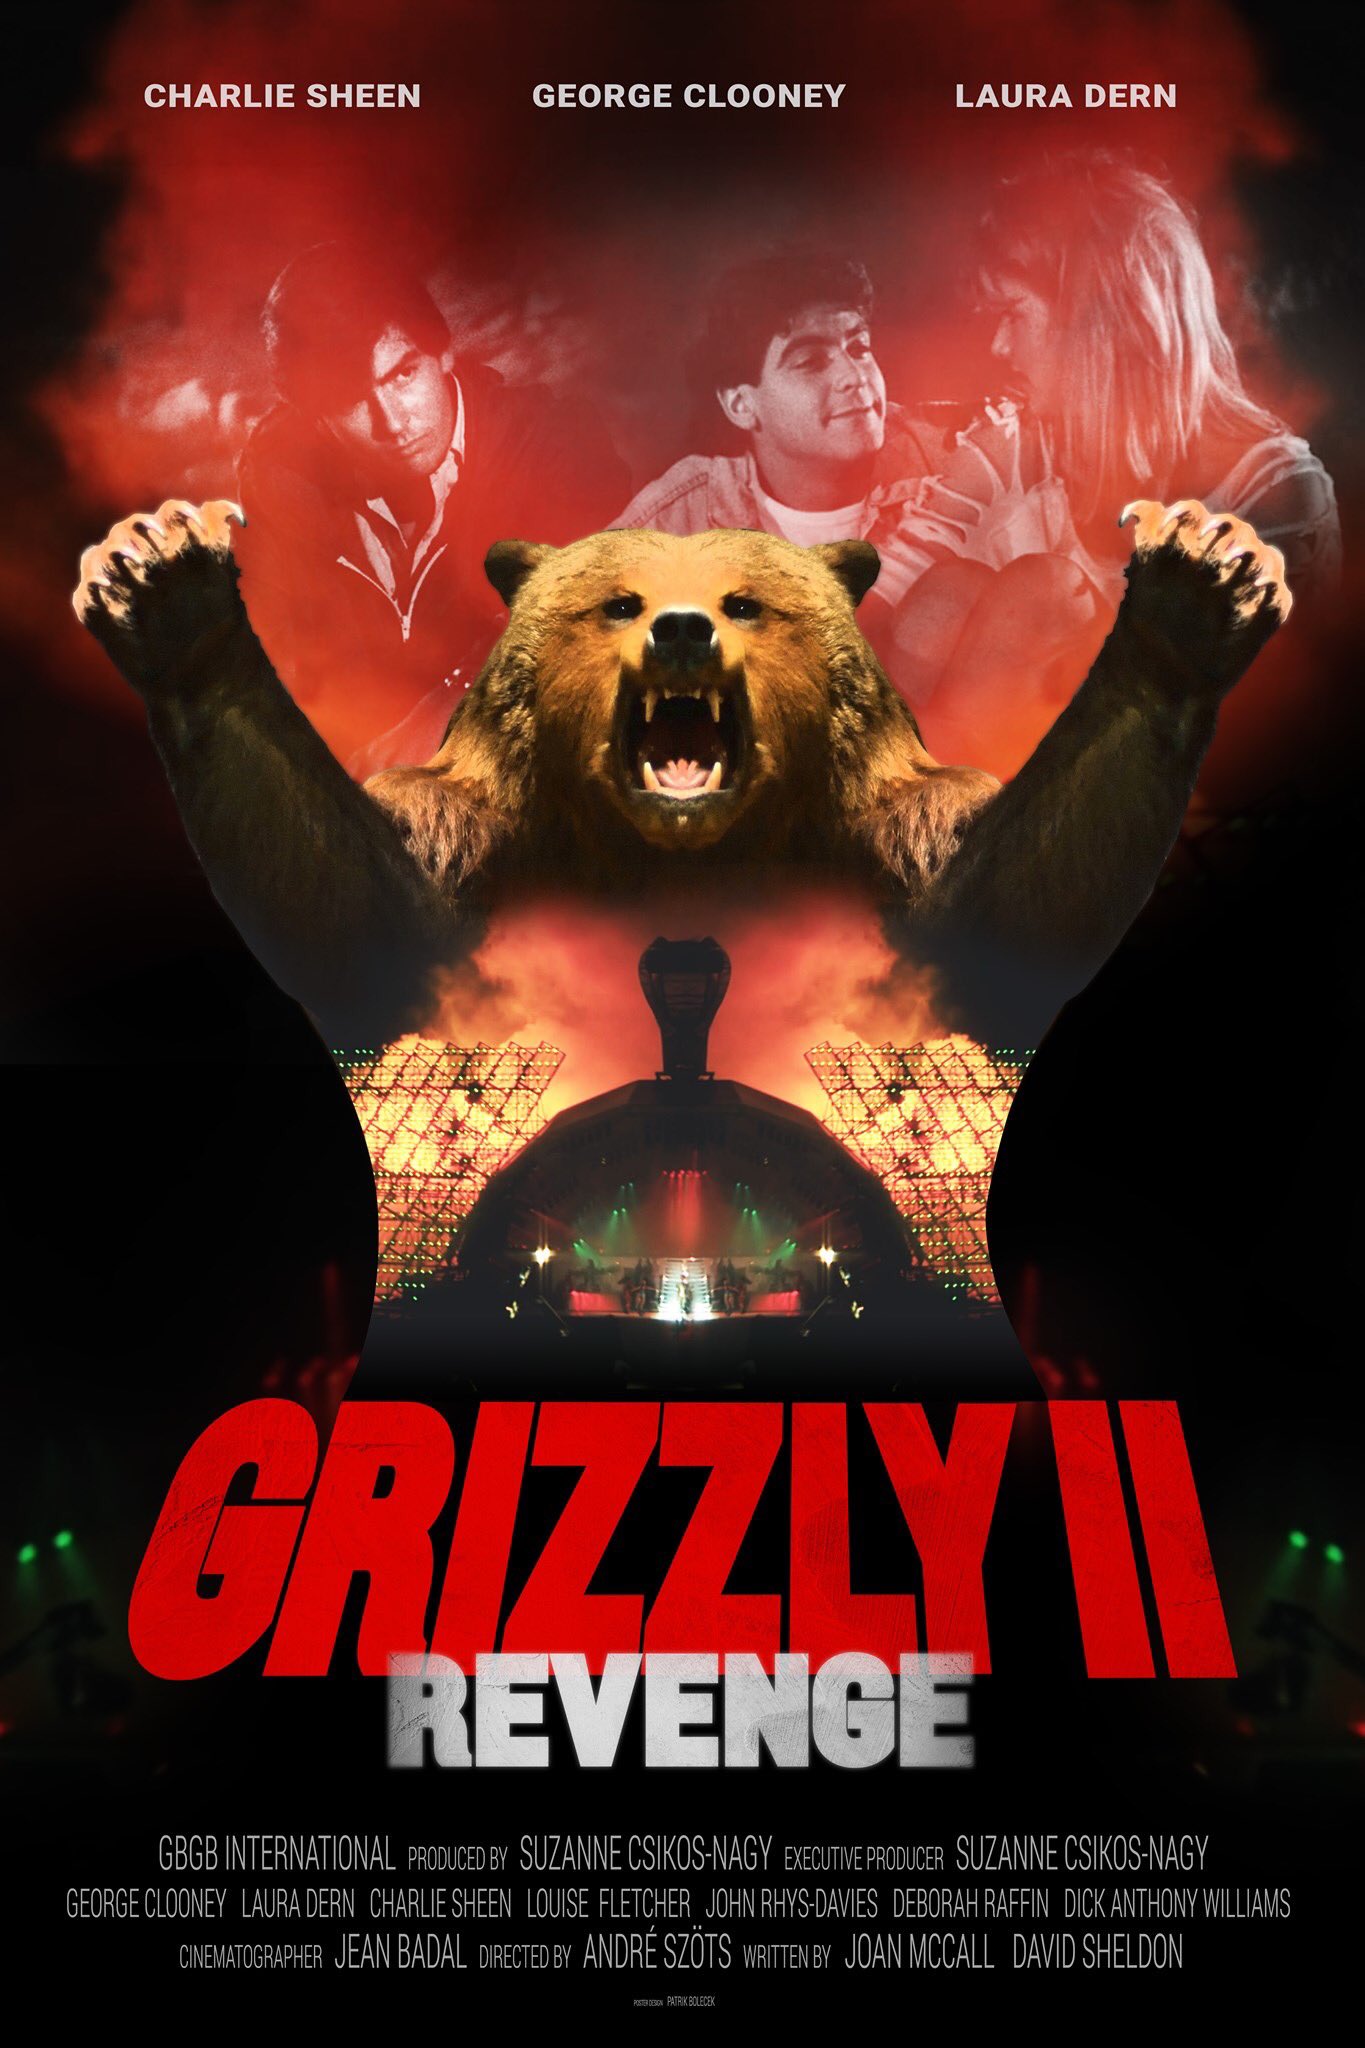 Nonton film Grizzly II: Revenge layarkaca21 indoxx1 ganool online streaming terbaru